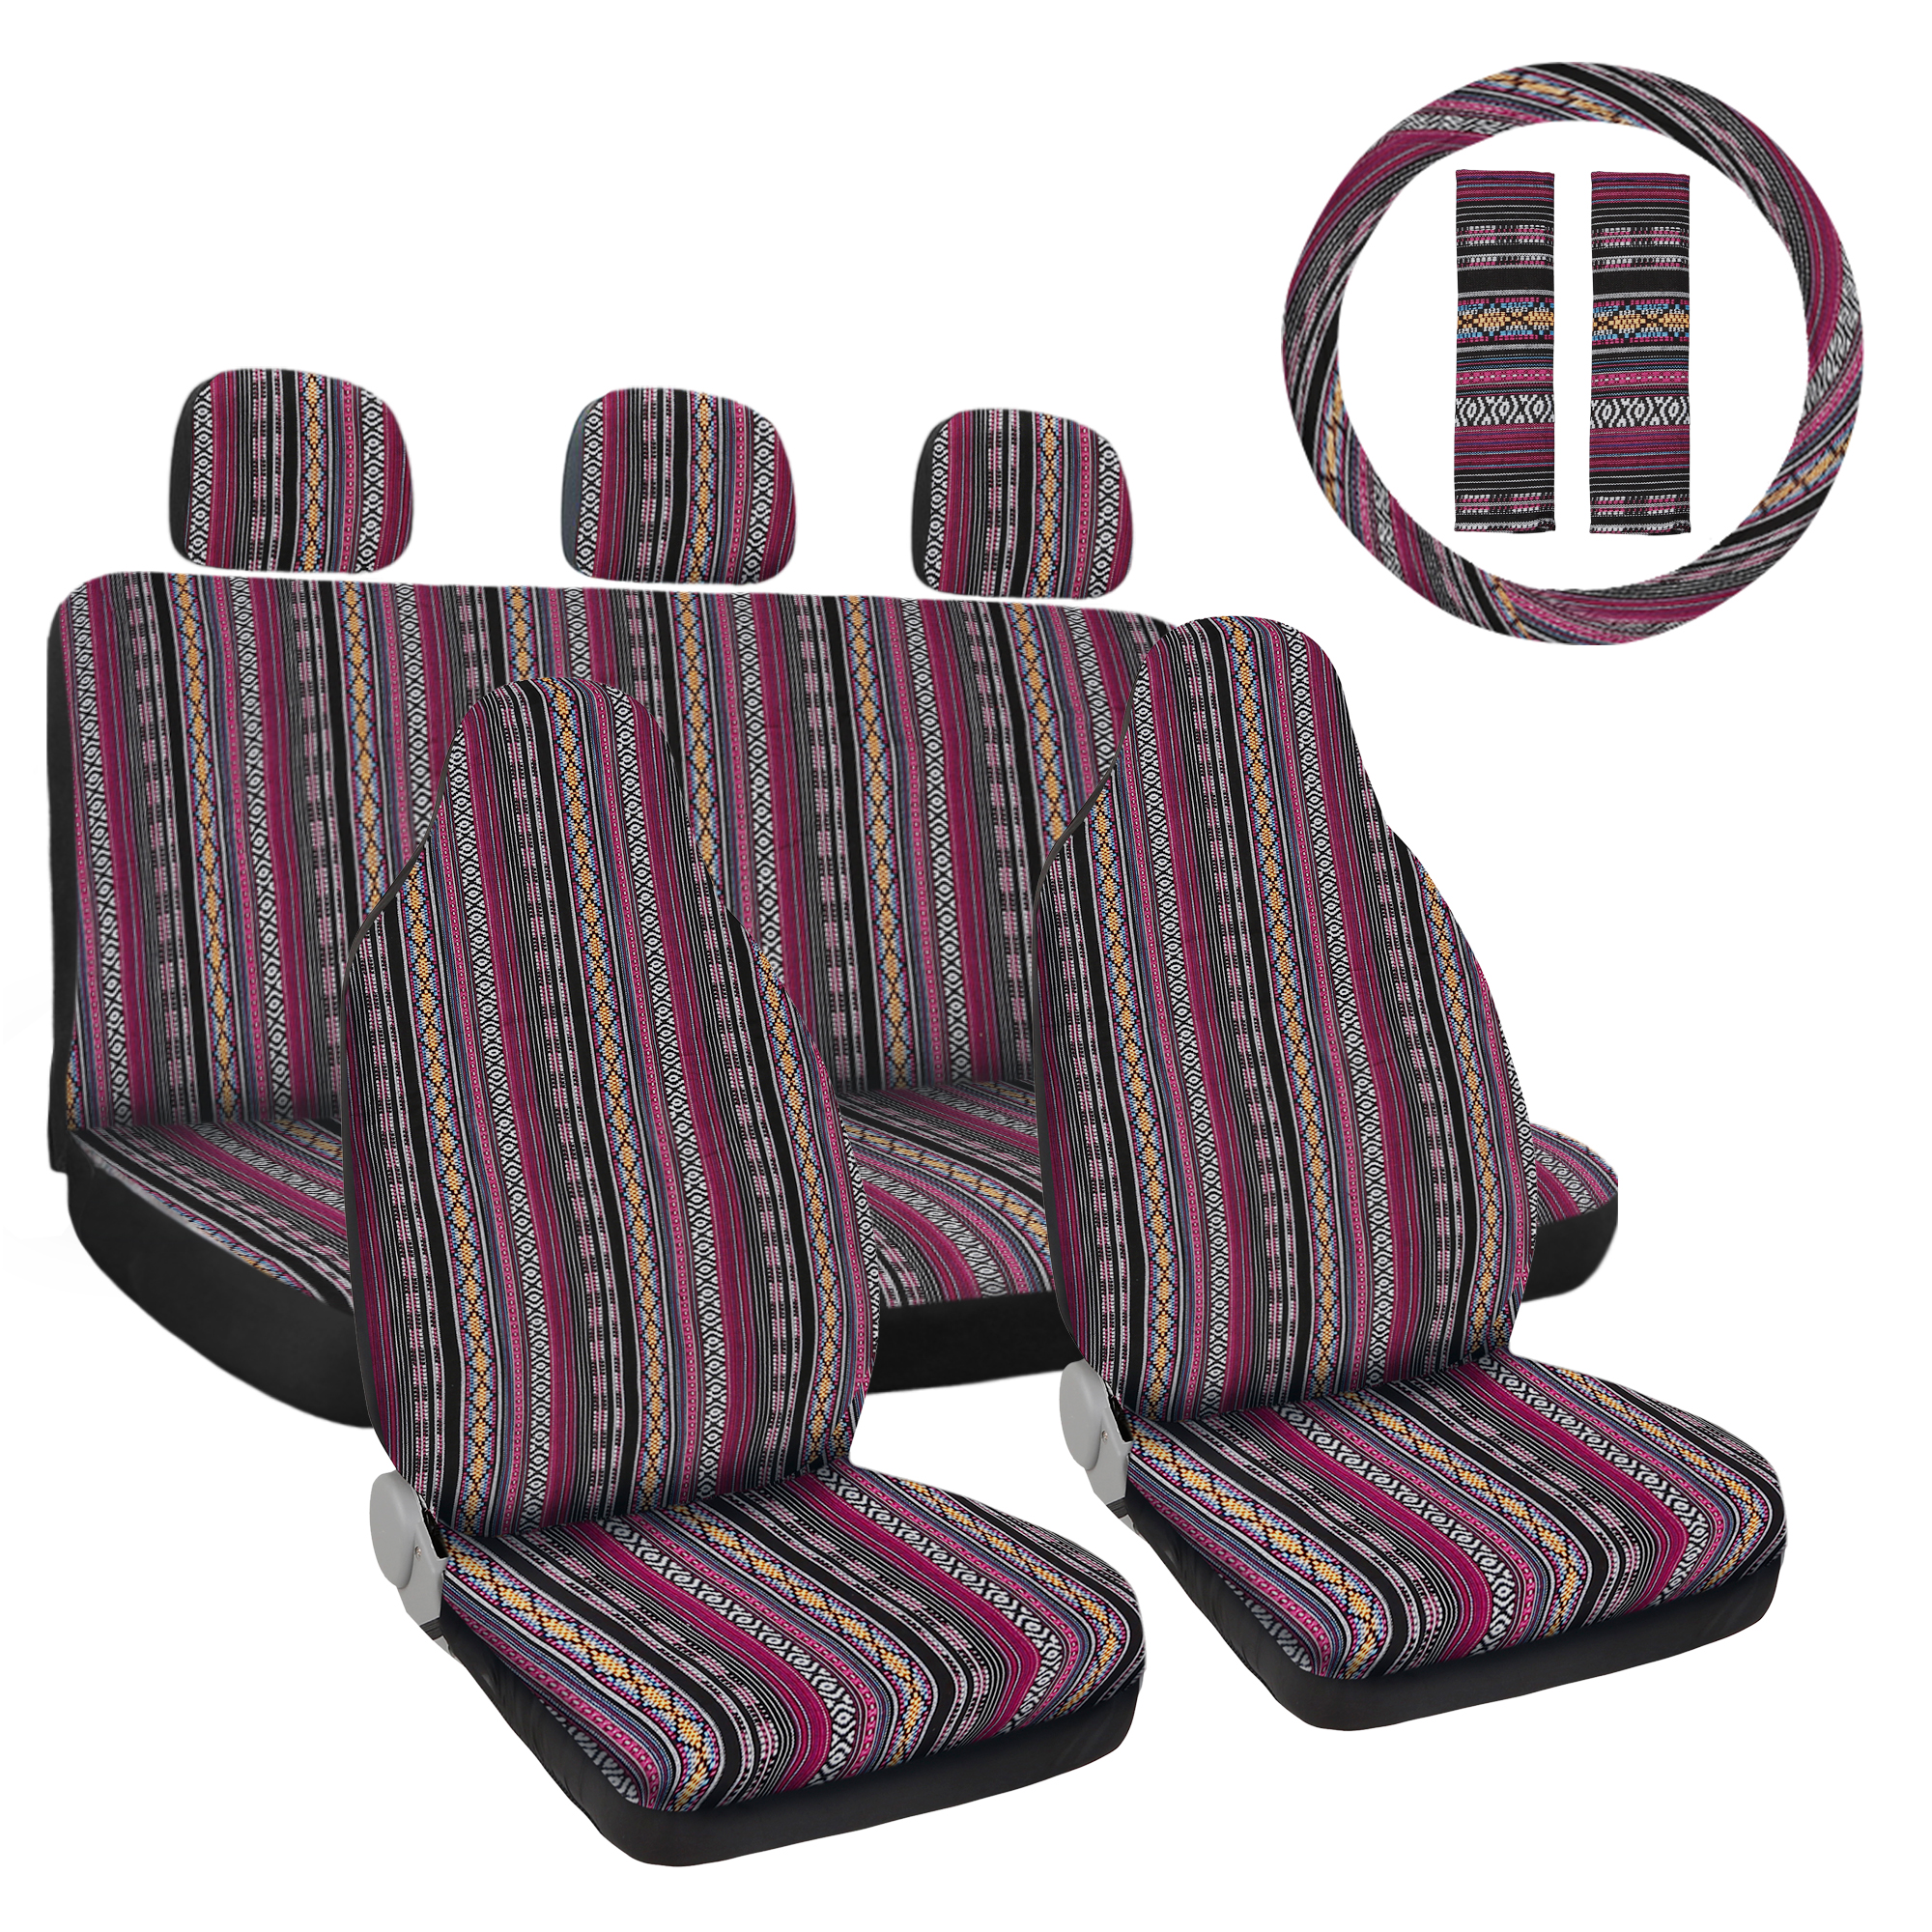 Unique Bargains 10pcs Universal Purple Seat Covers Baja Saddle Blanket Seat Cover Full Set - image 1 of 6